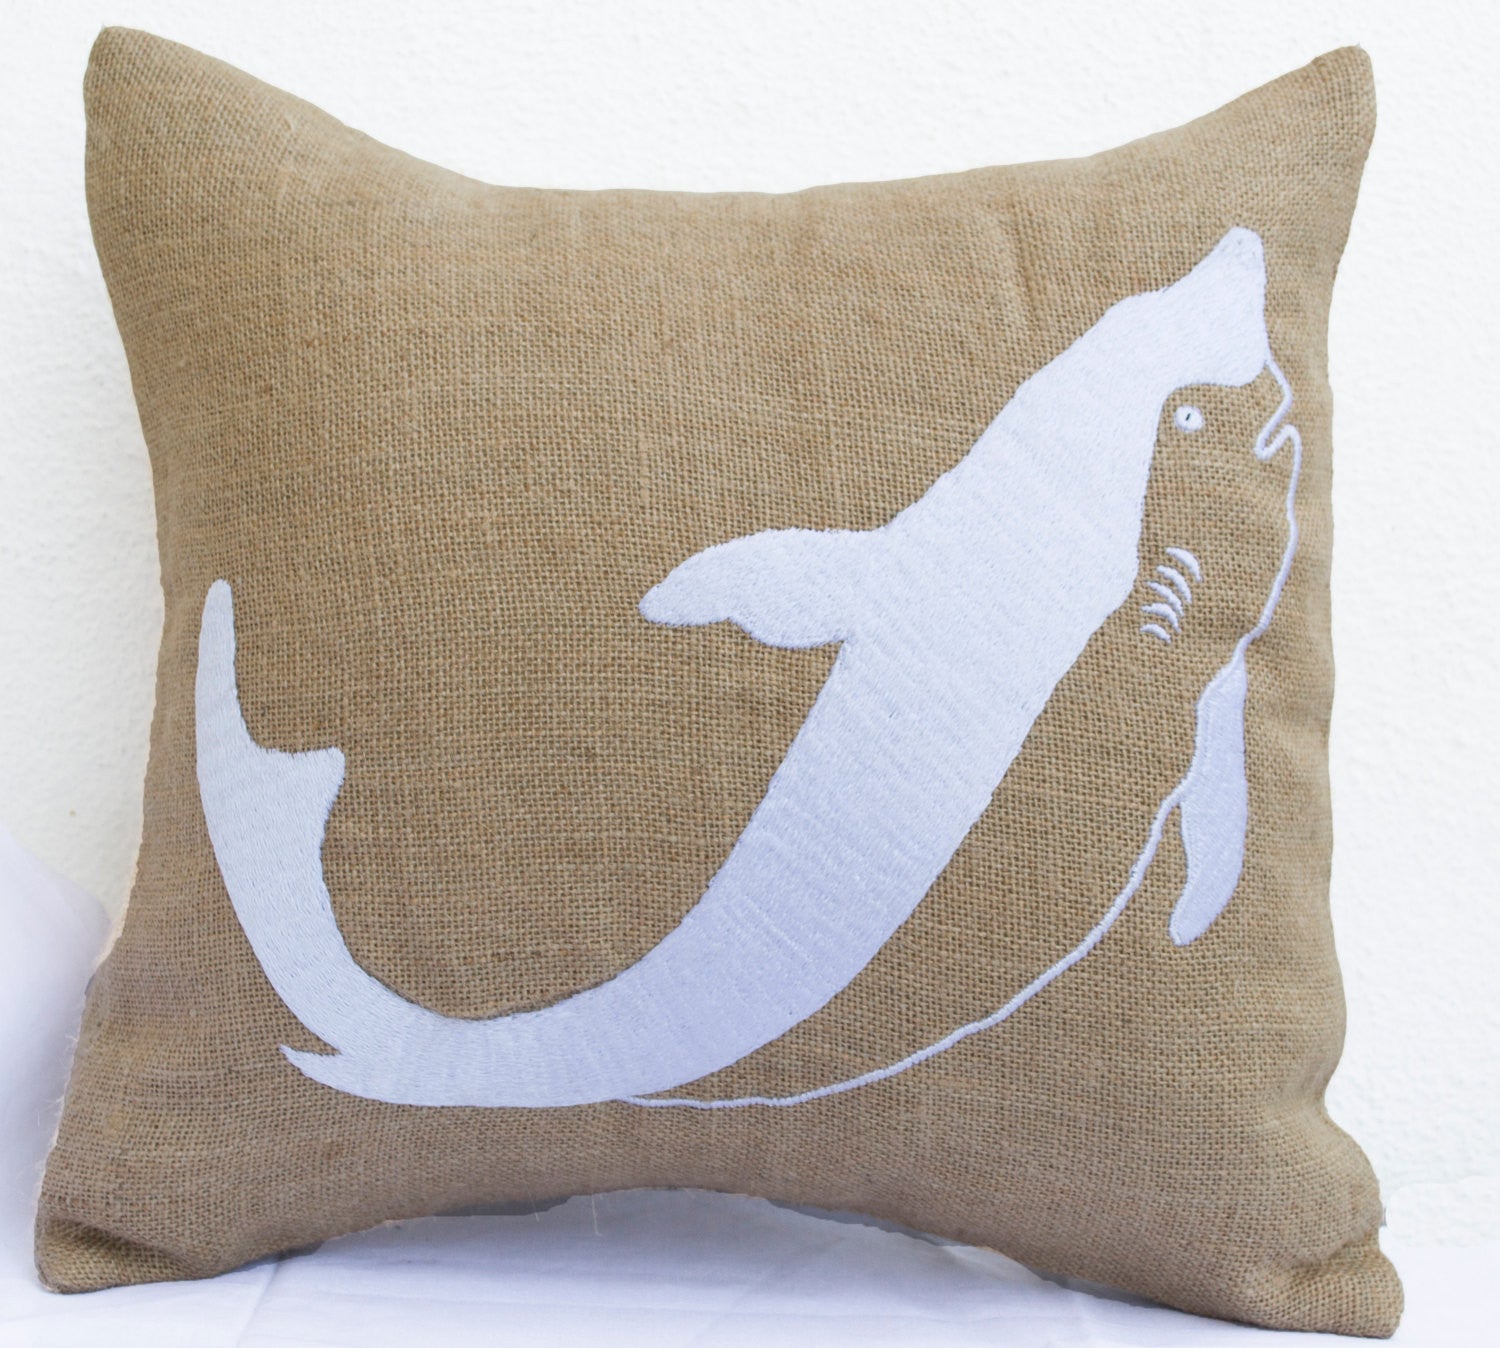 Handmade shark embroidered beige white throw pillow